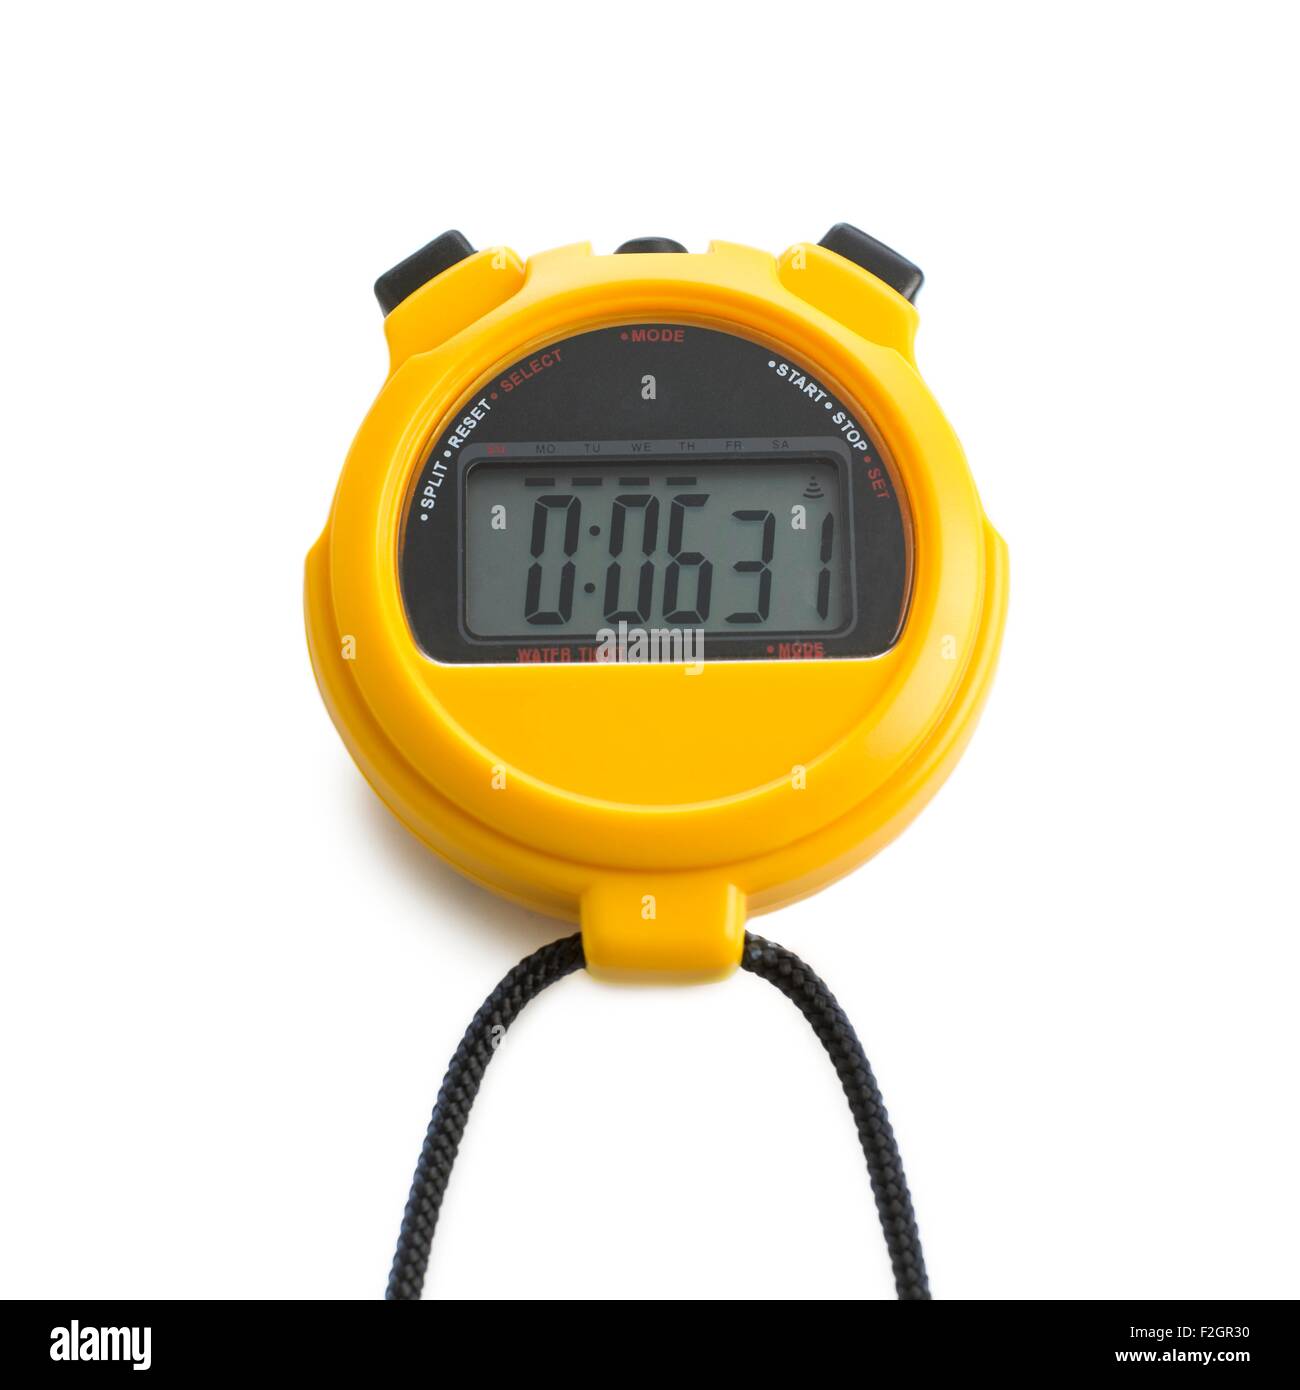 Vicloon Digital Cronómetro, Cronómetro Reloj, Cronómetro Deportivo